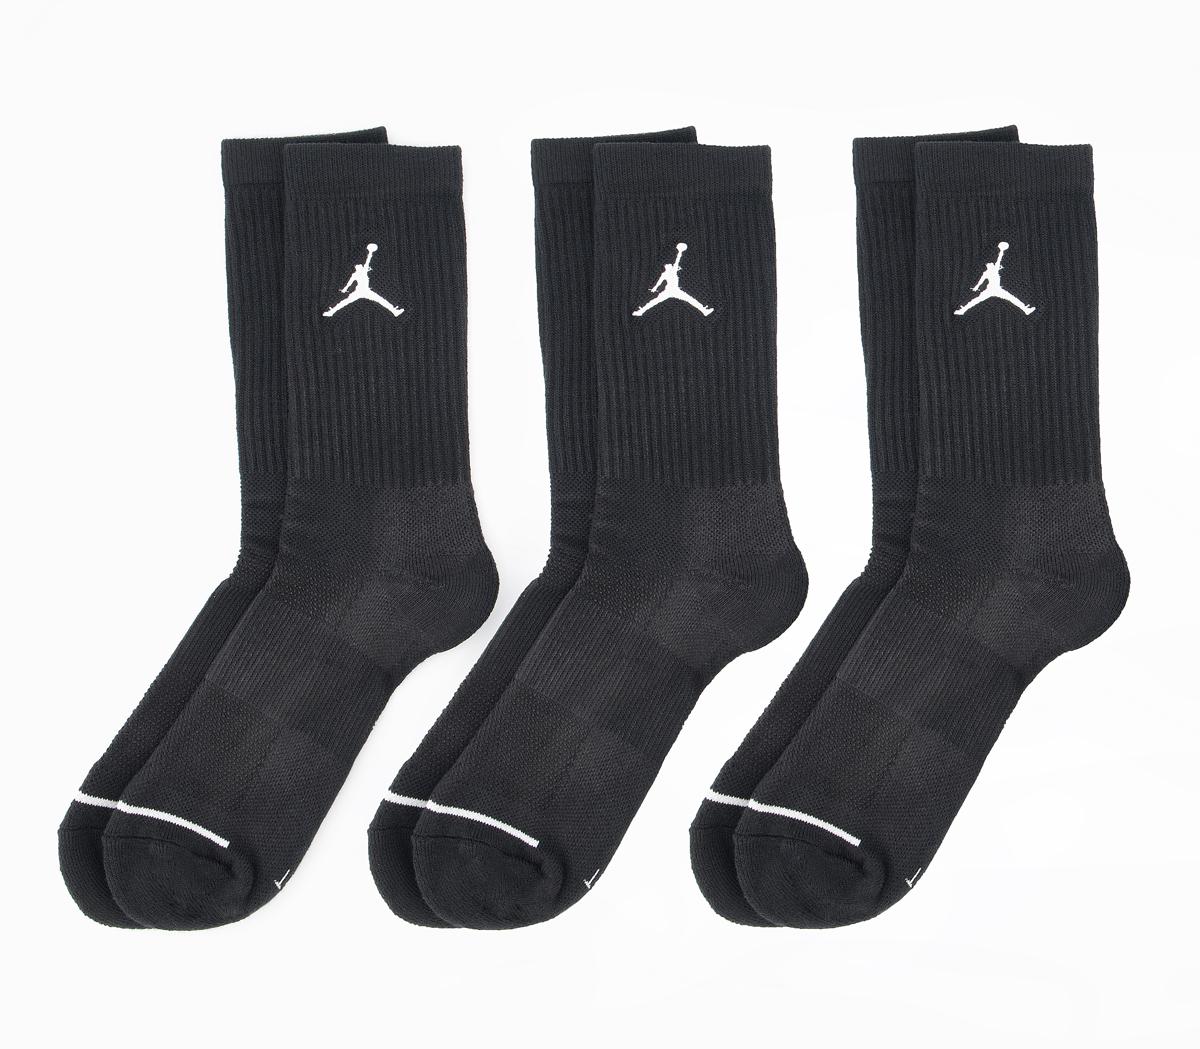 NikeJordan Jumpman Crew Socks 3 PairsBlack